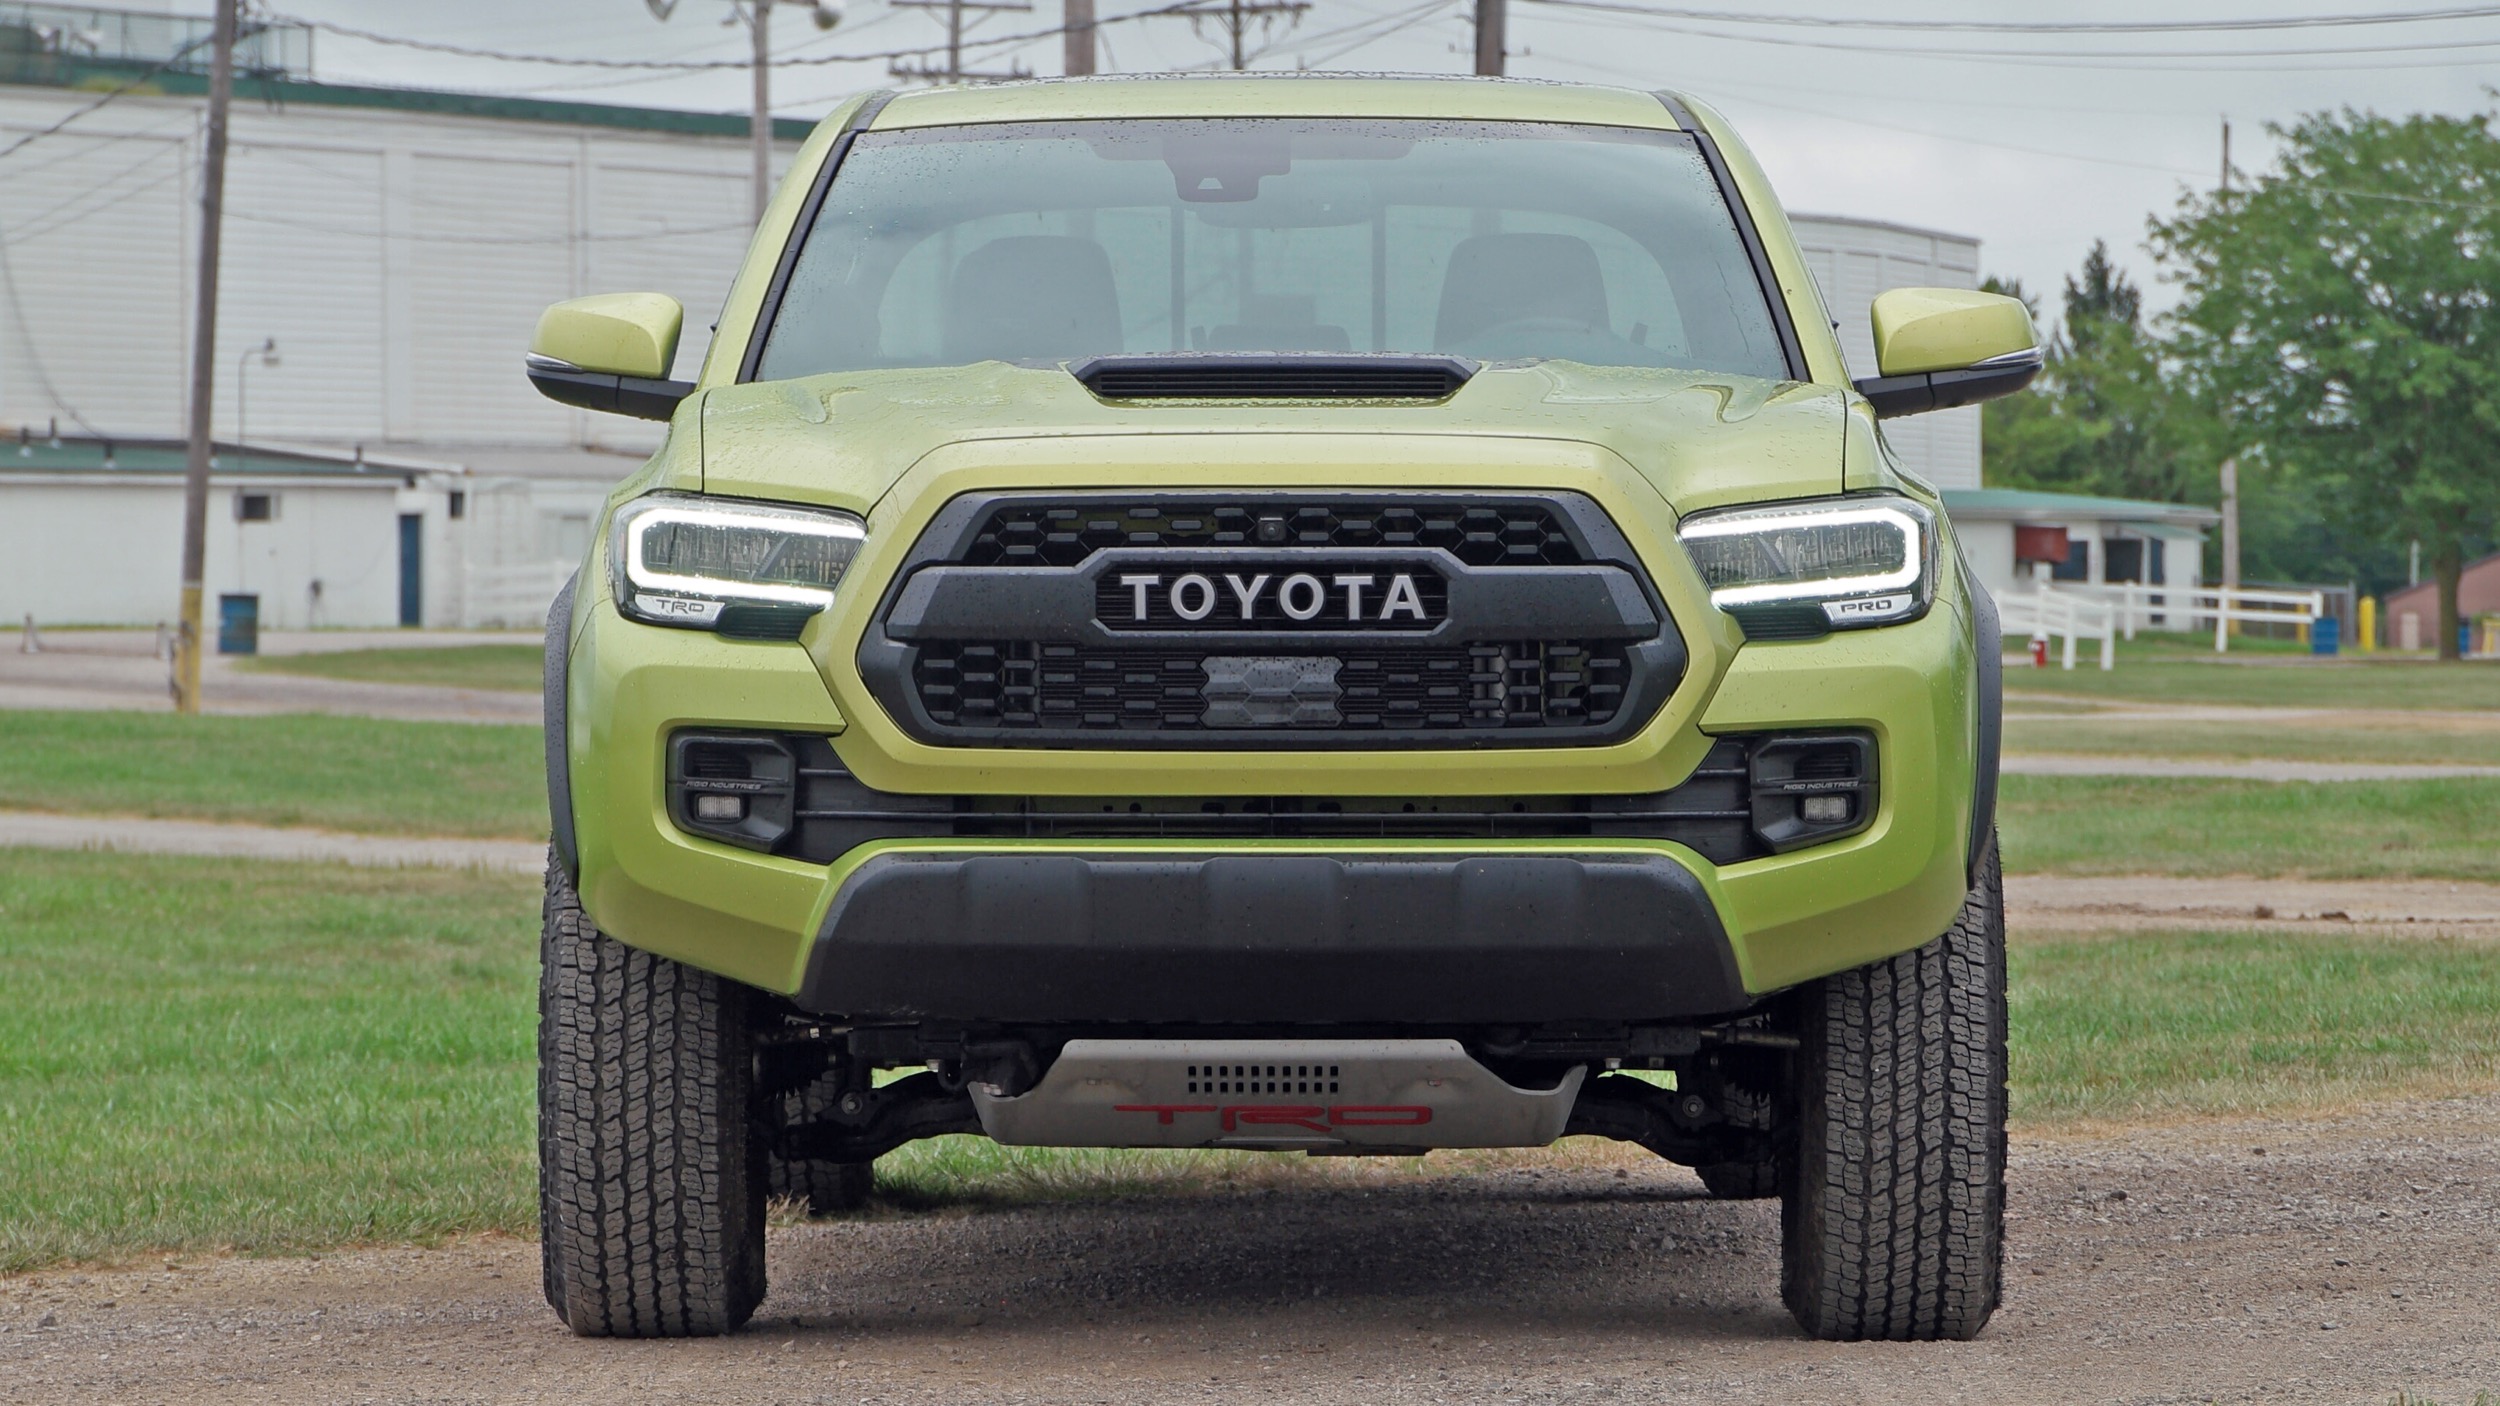 Toyota recall affects 381,000 trucks in the U.S. Autoblog